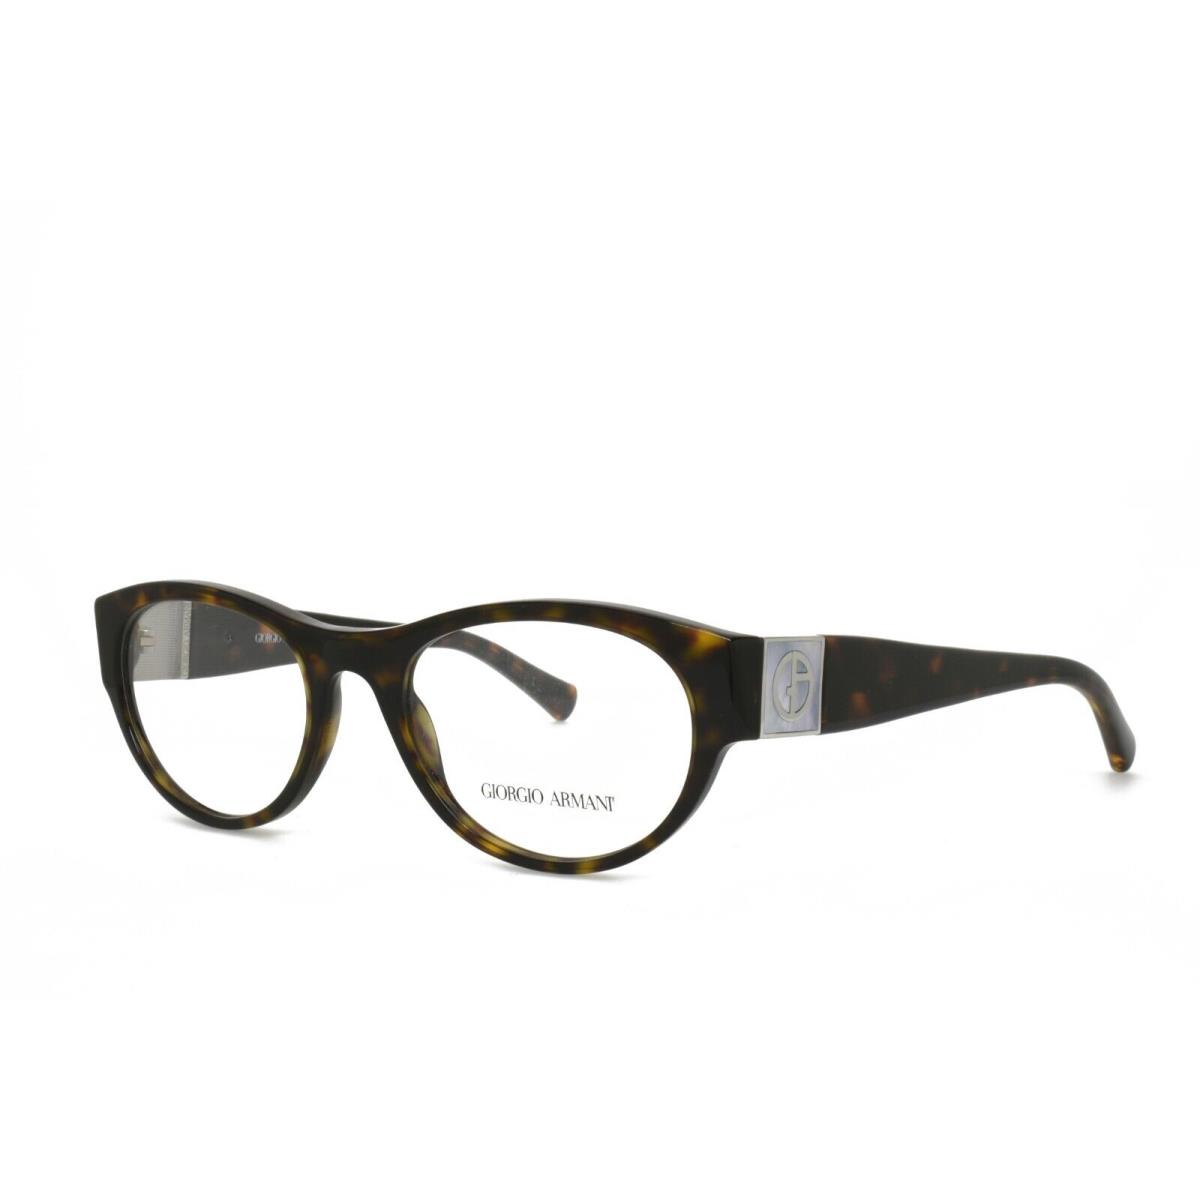 Giorgio Armani 7022H 5026 52-19-140 Tortoise Eyeglasses Frames